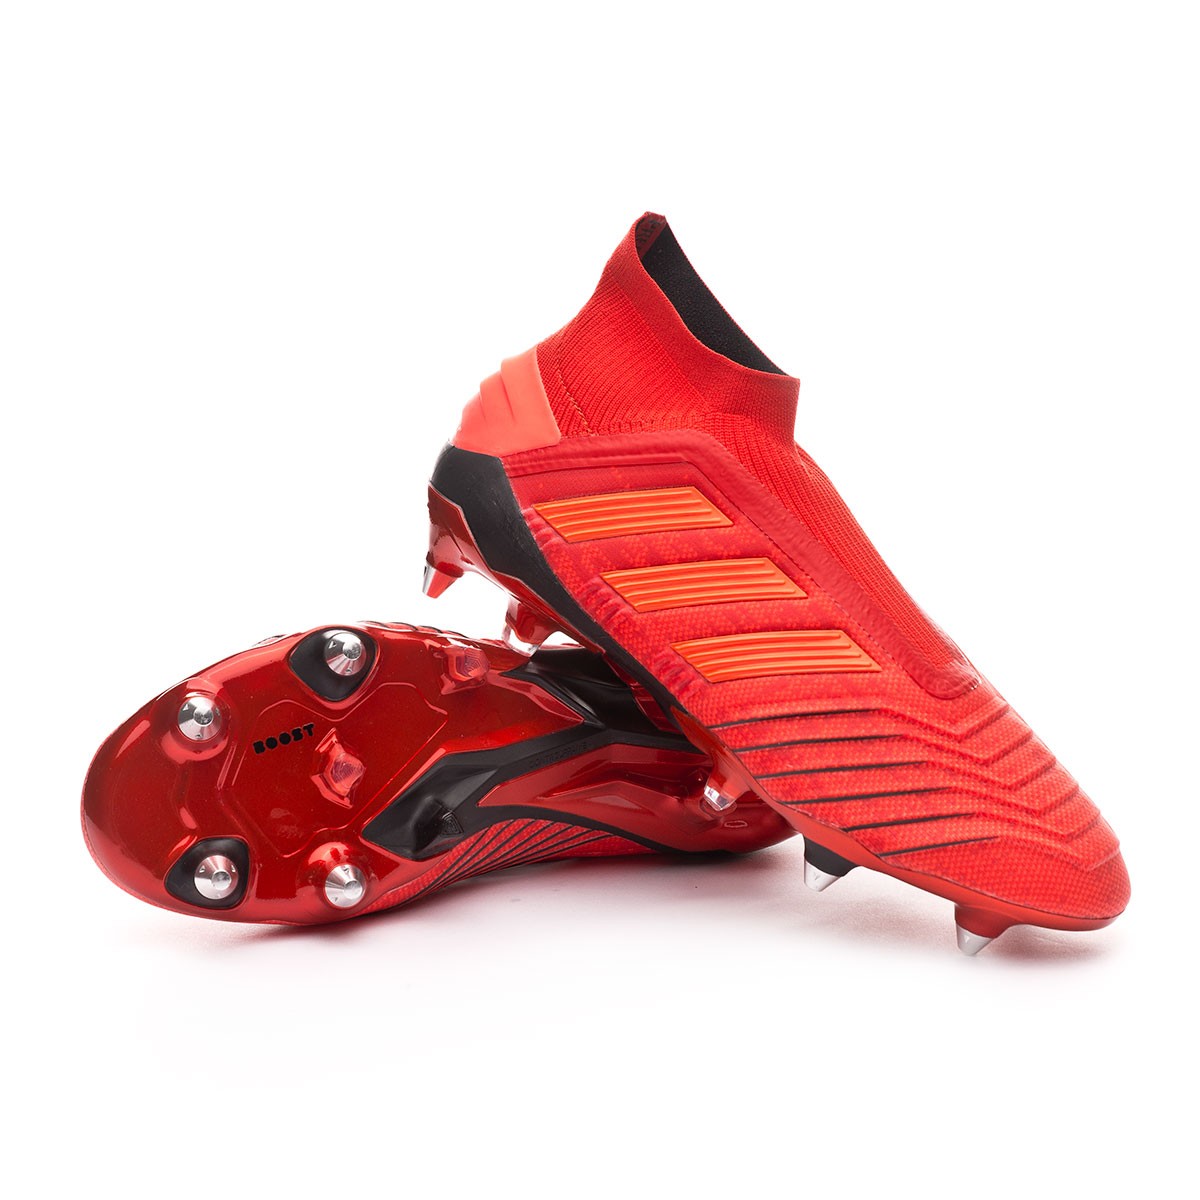 red predator football boots